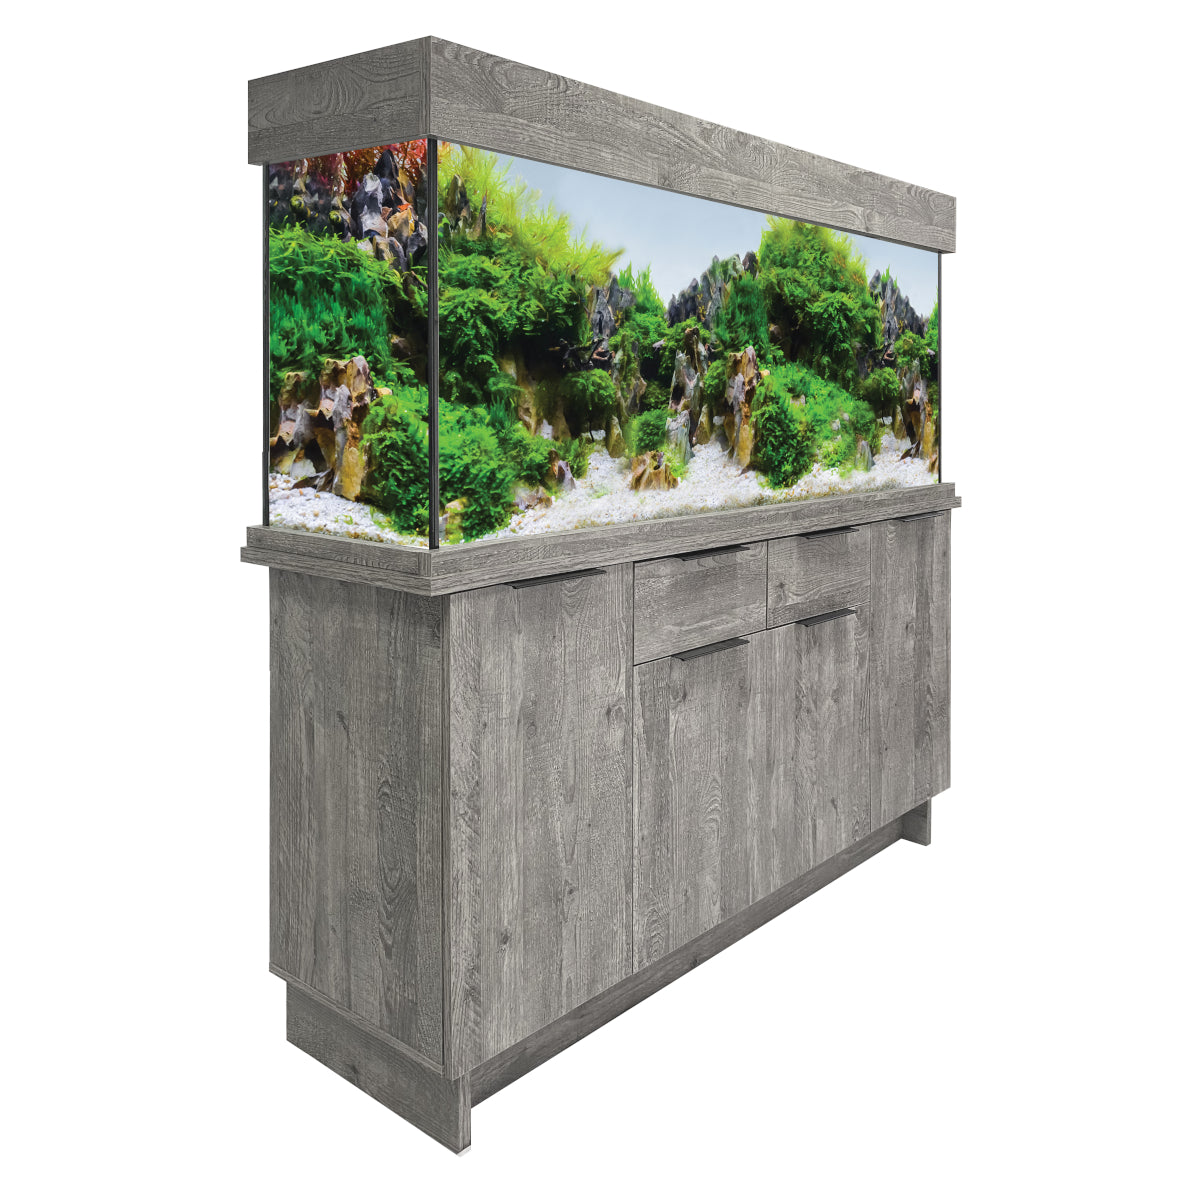 Aqua One Urban Oak Style Aquarium Fish Tank with Cabinet 150cm 300L